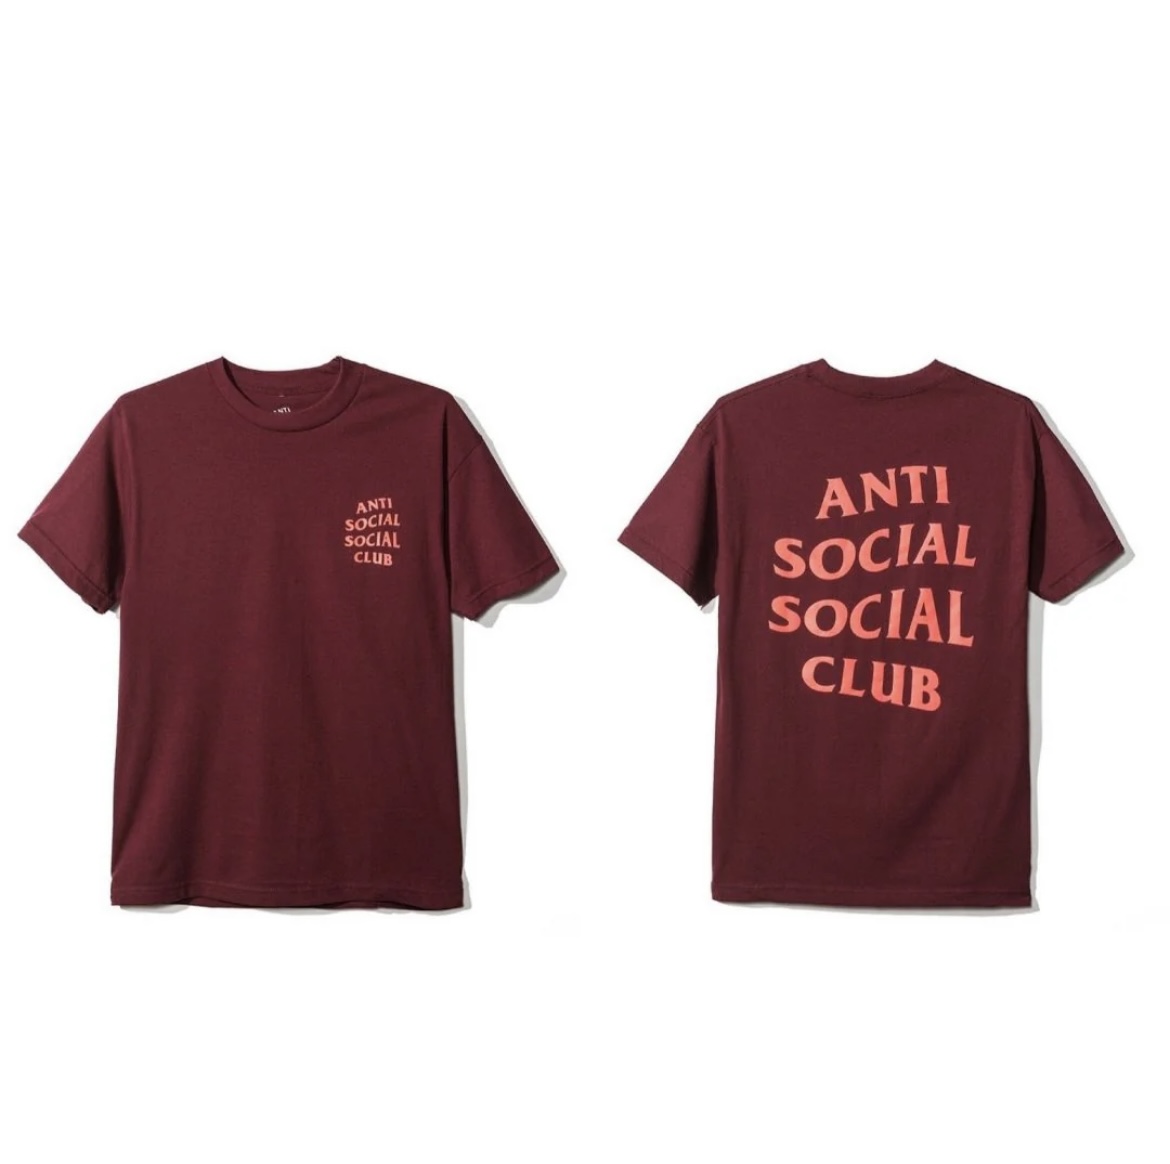 ASSC Anti Social Social Club Tee 2 Maroon Size XL